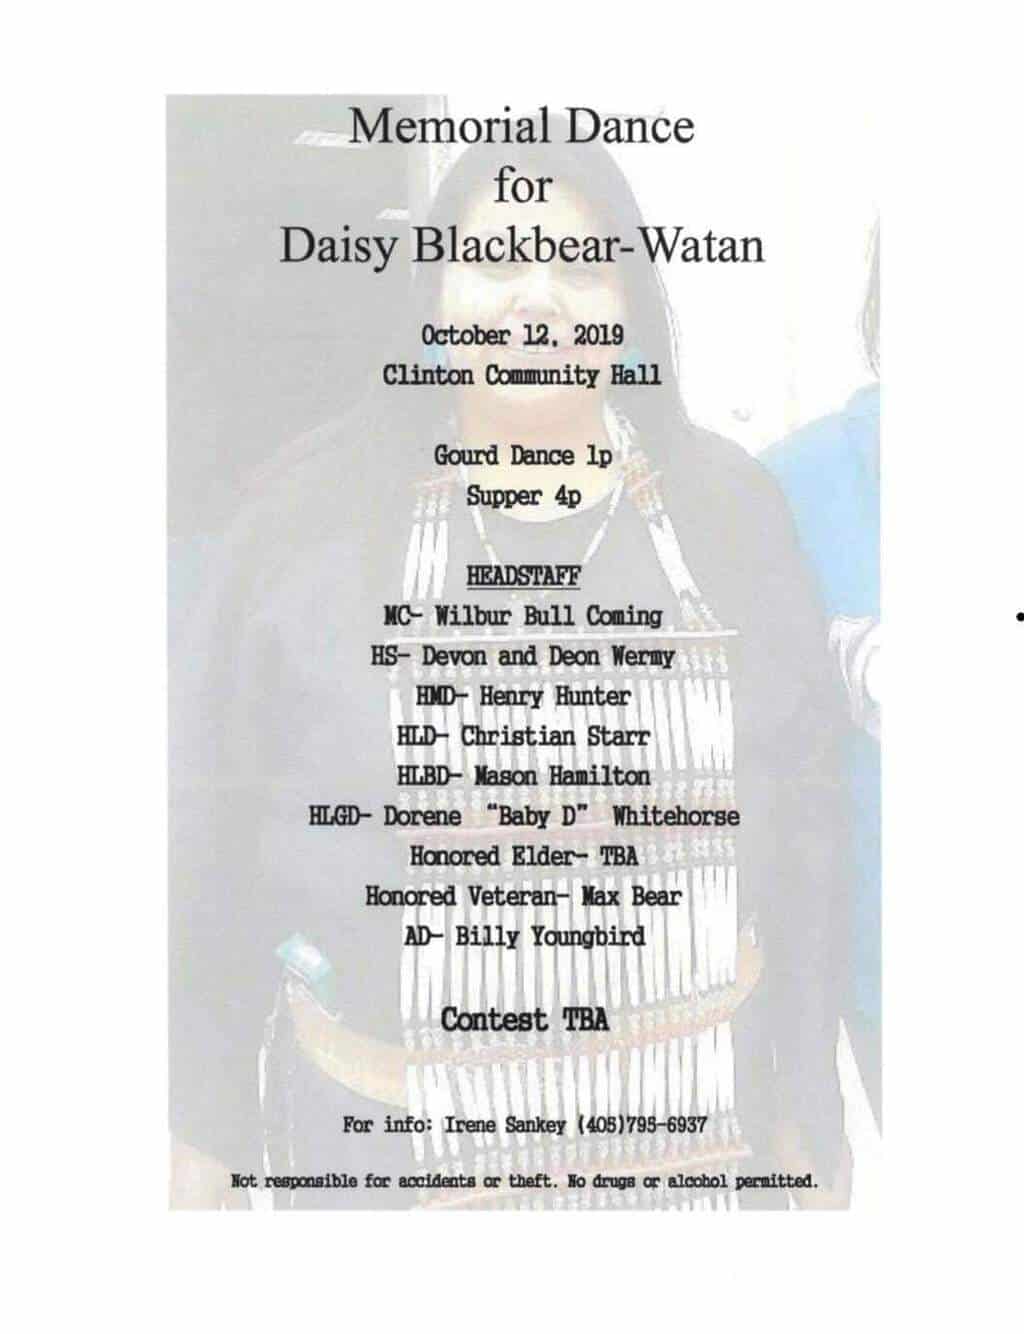 Memorial Dance for Daisy Blackbear-Watan